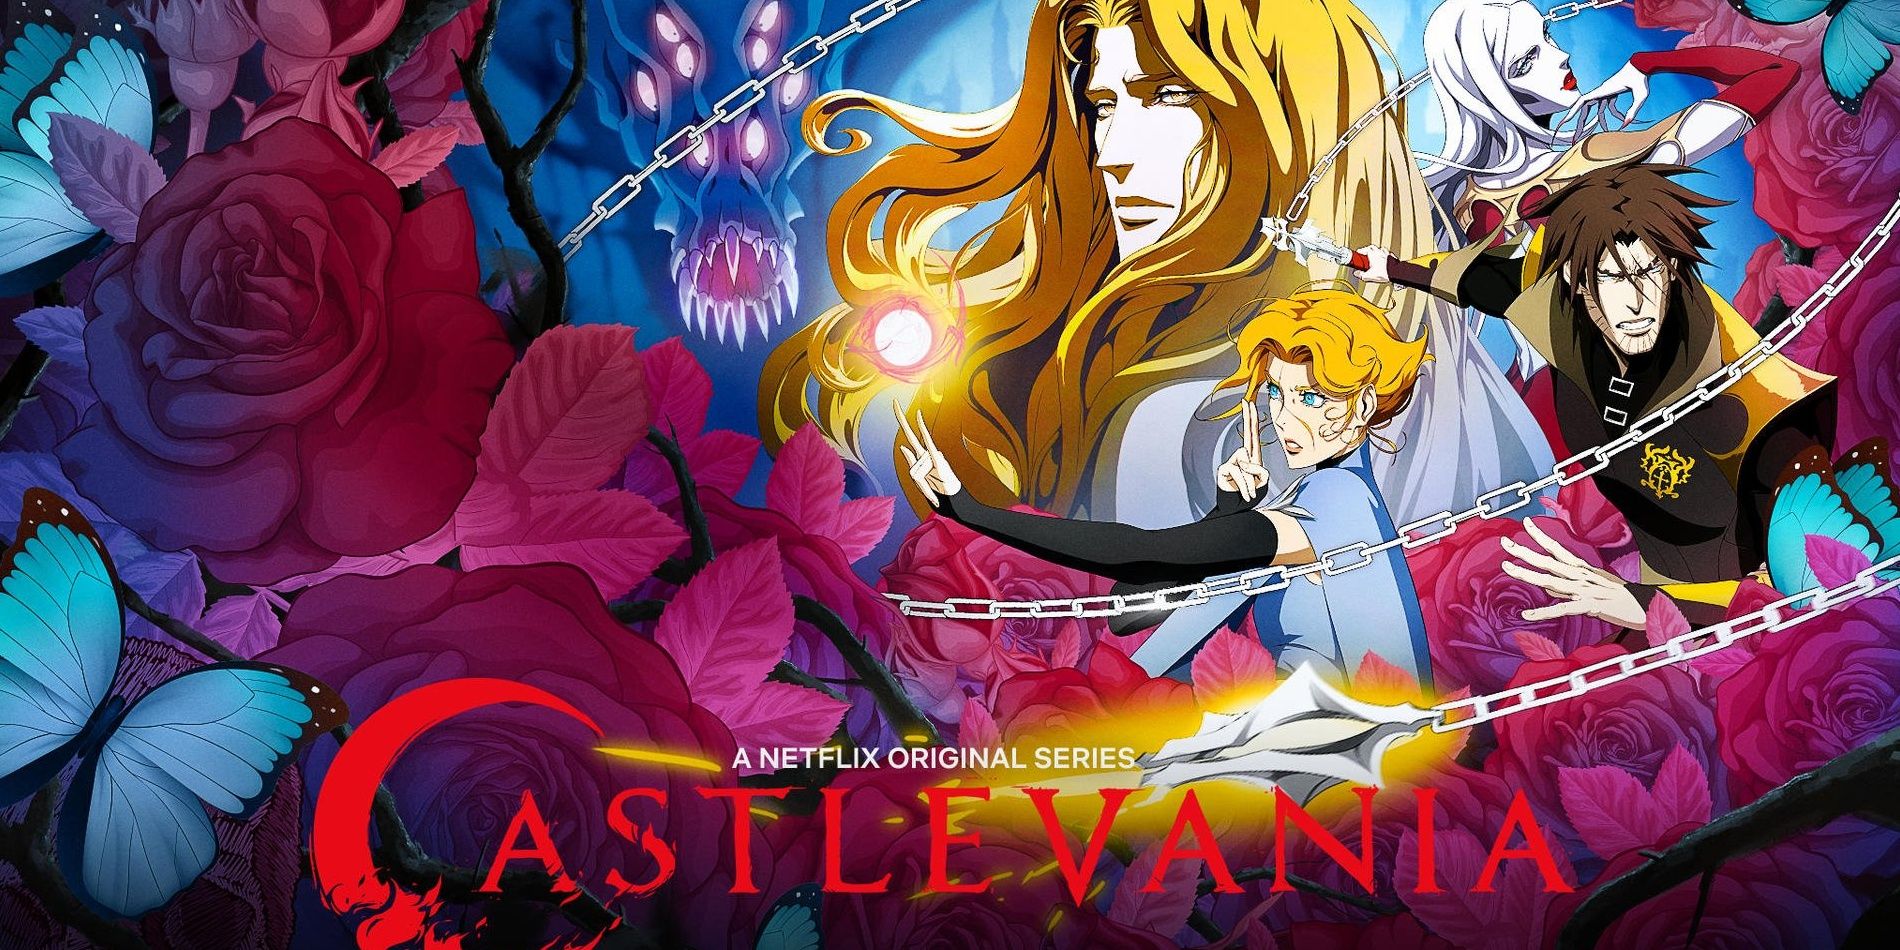 Promotion for Castlevania Season 3 on Netflix